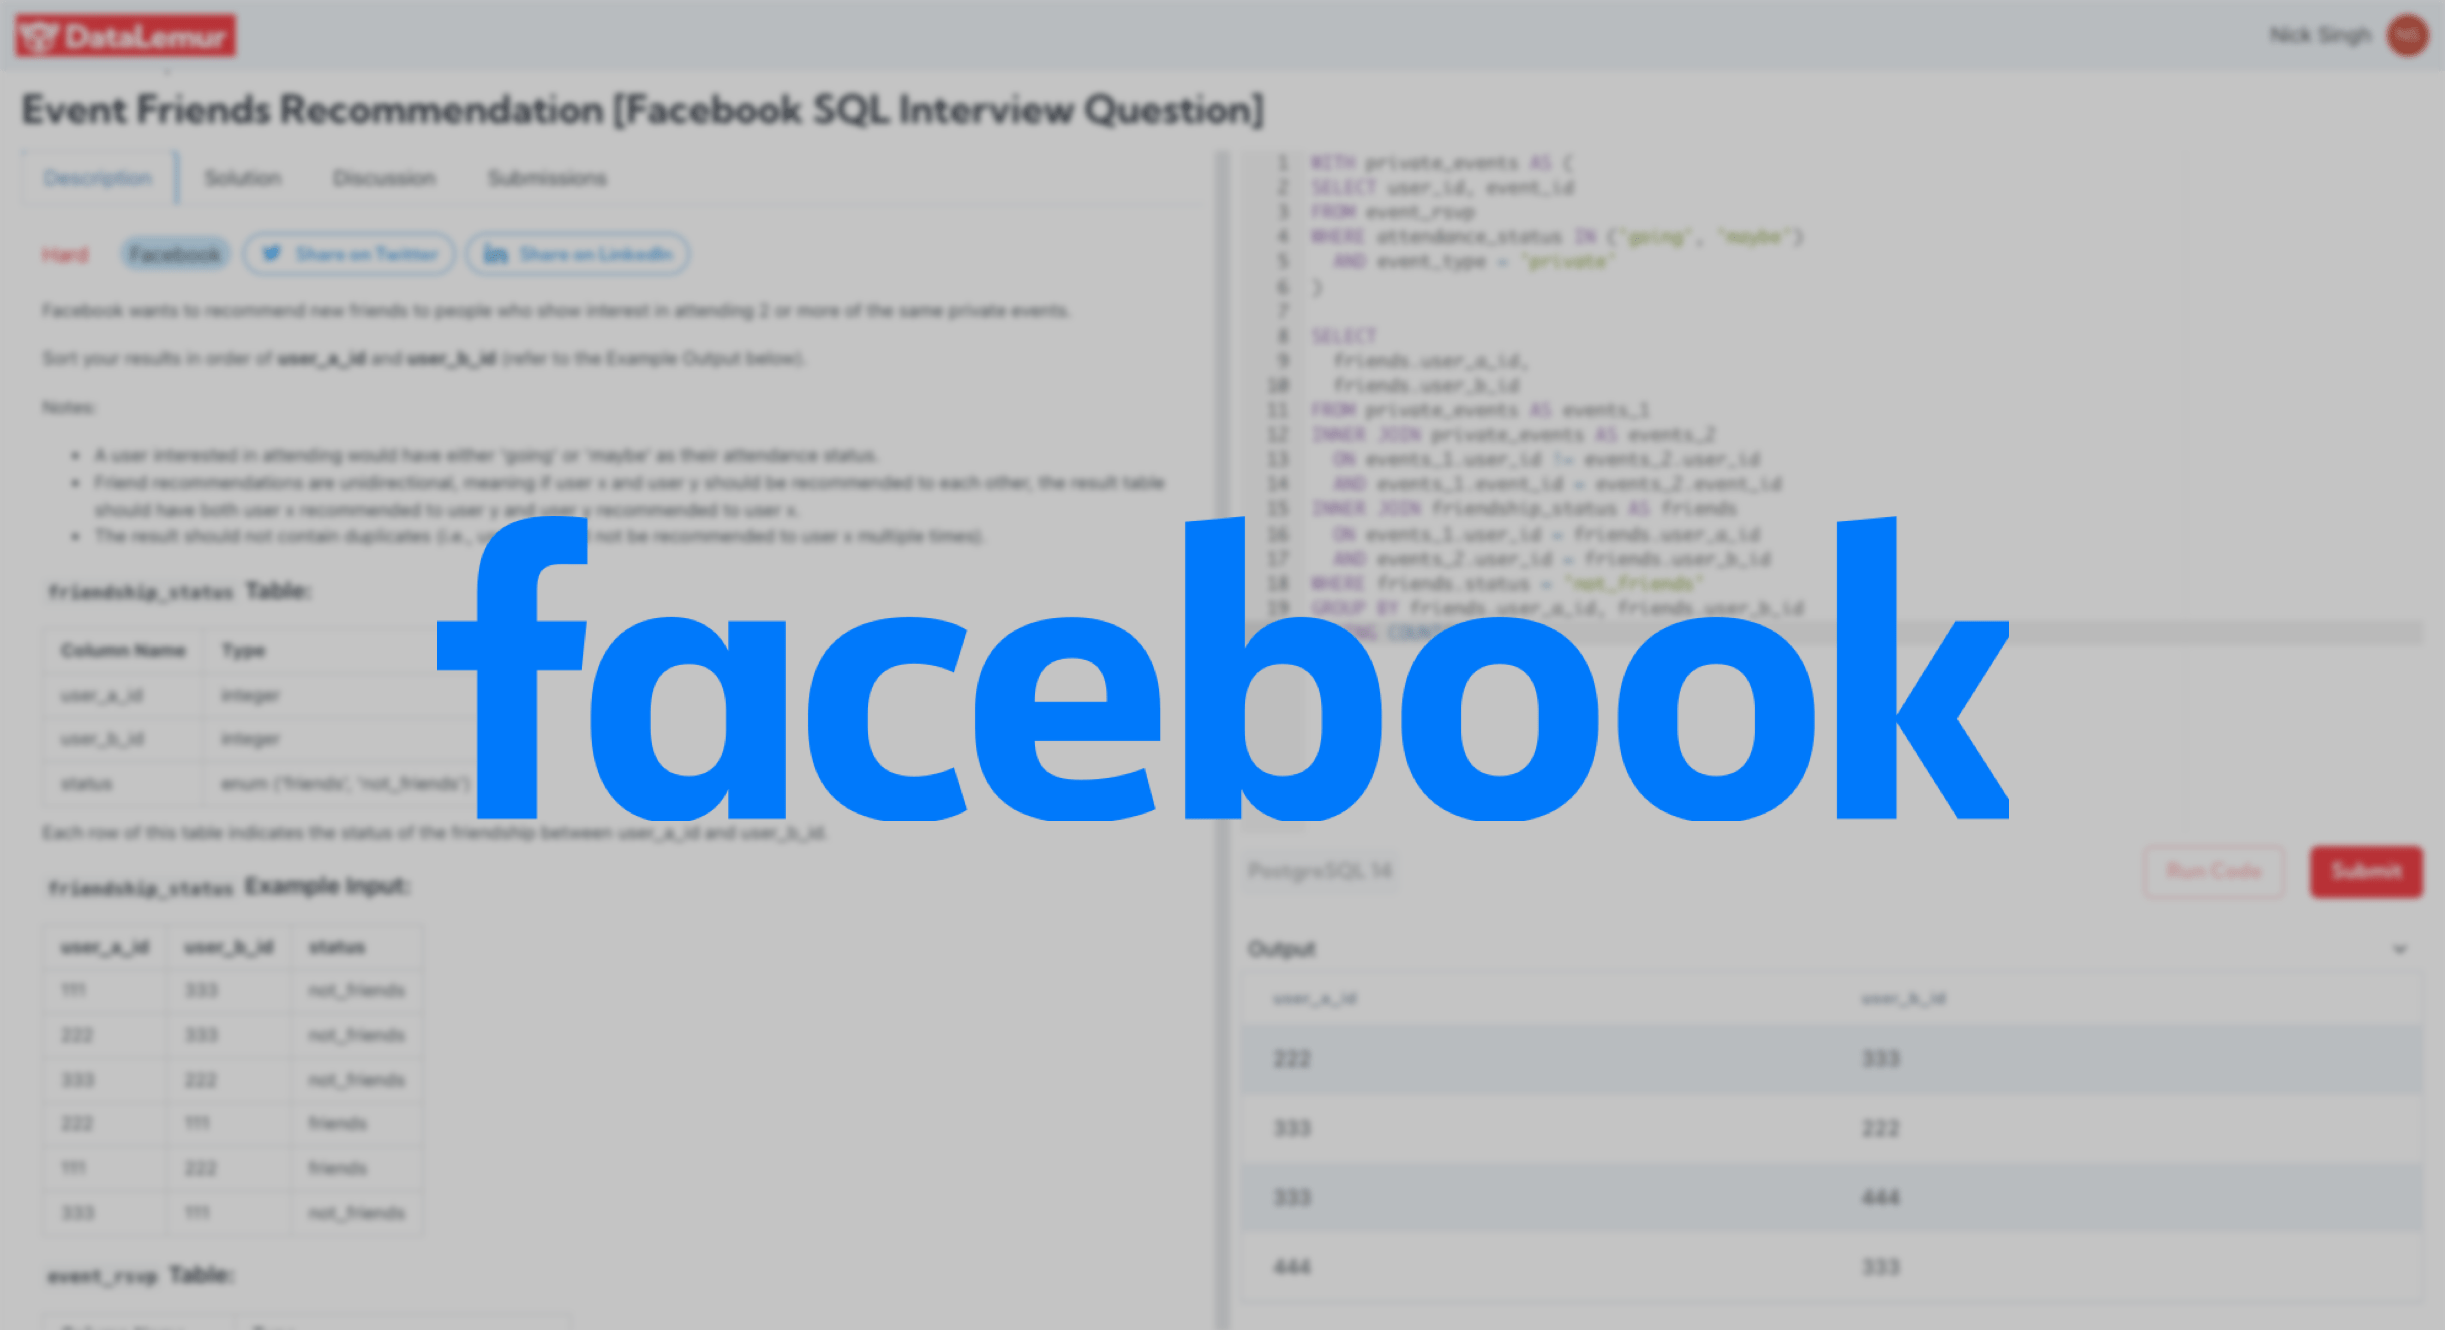 Facebook Friends Recommendation SQL Interview Question